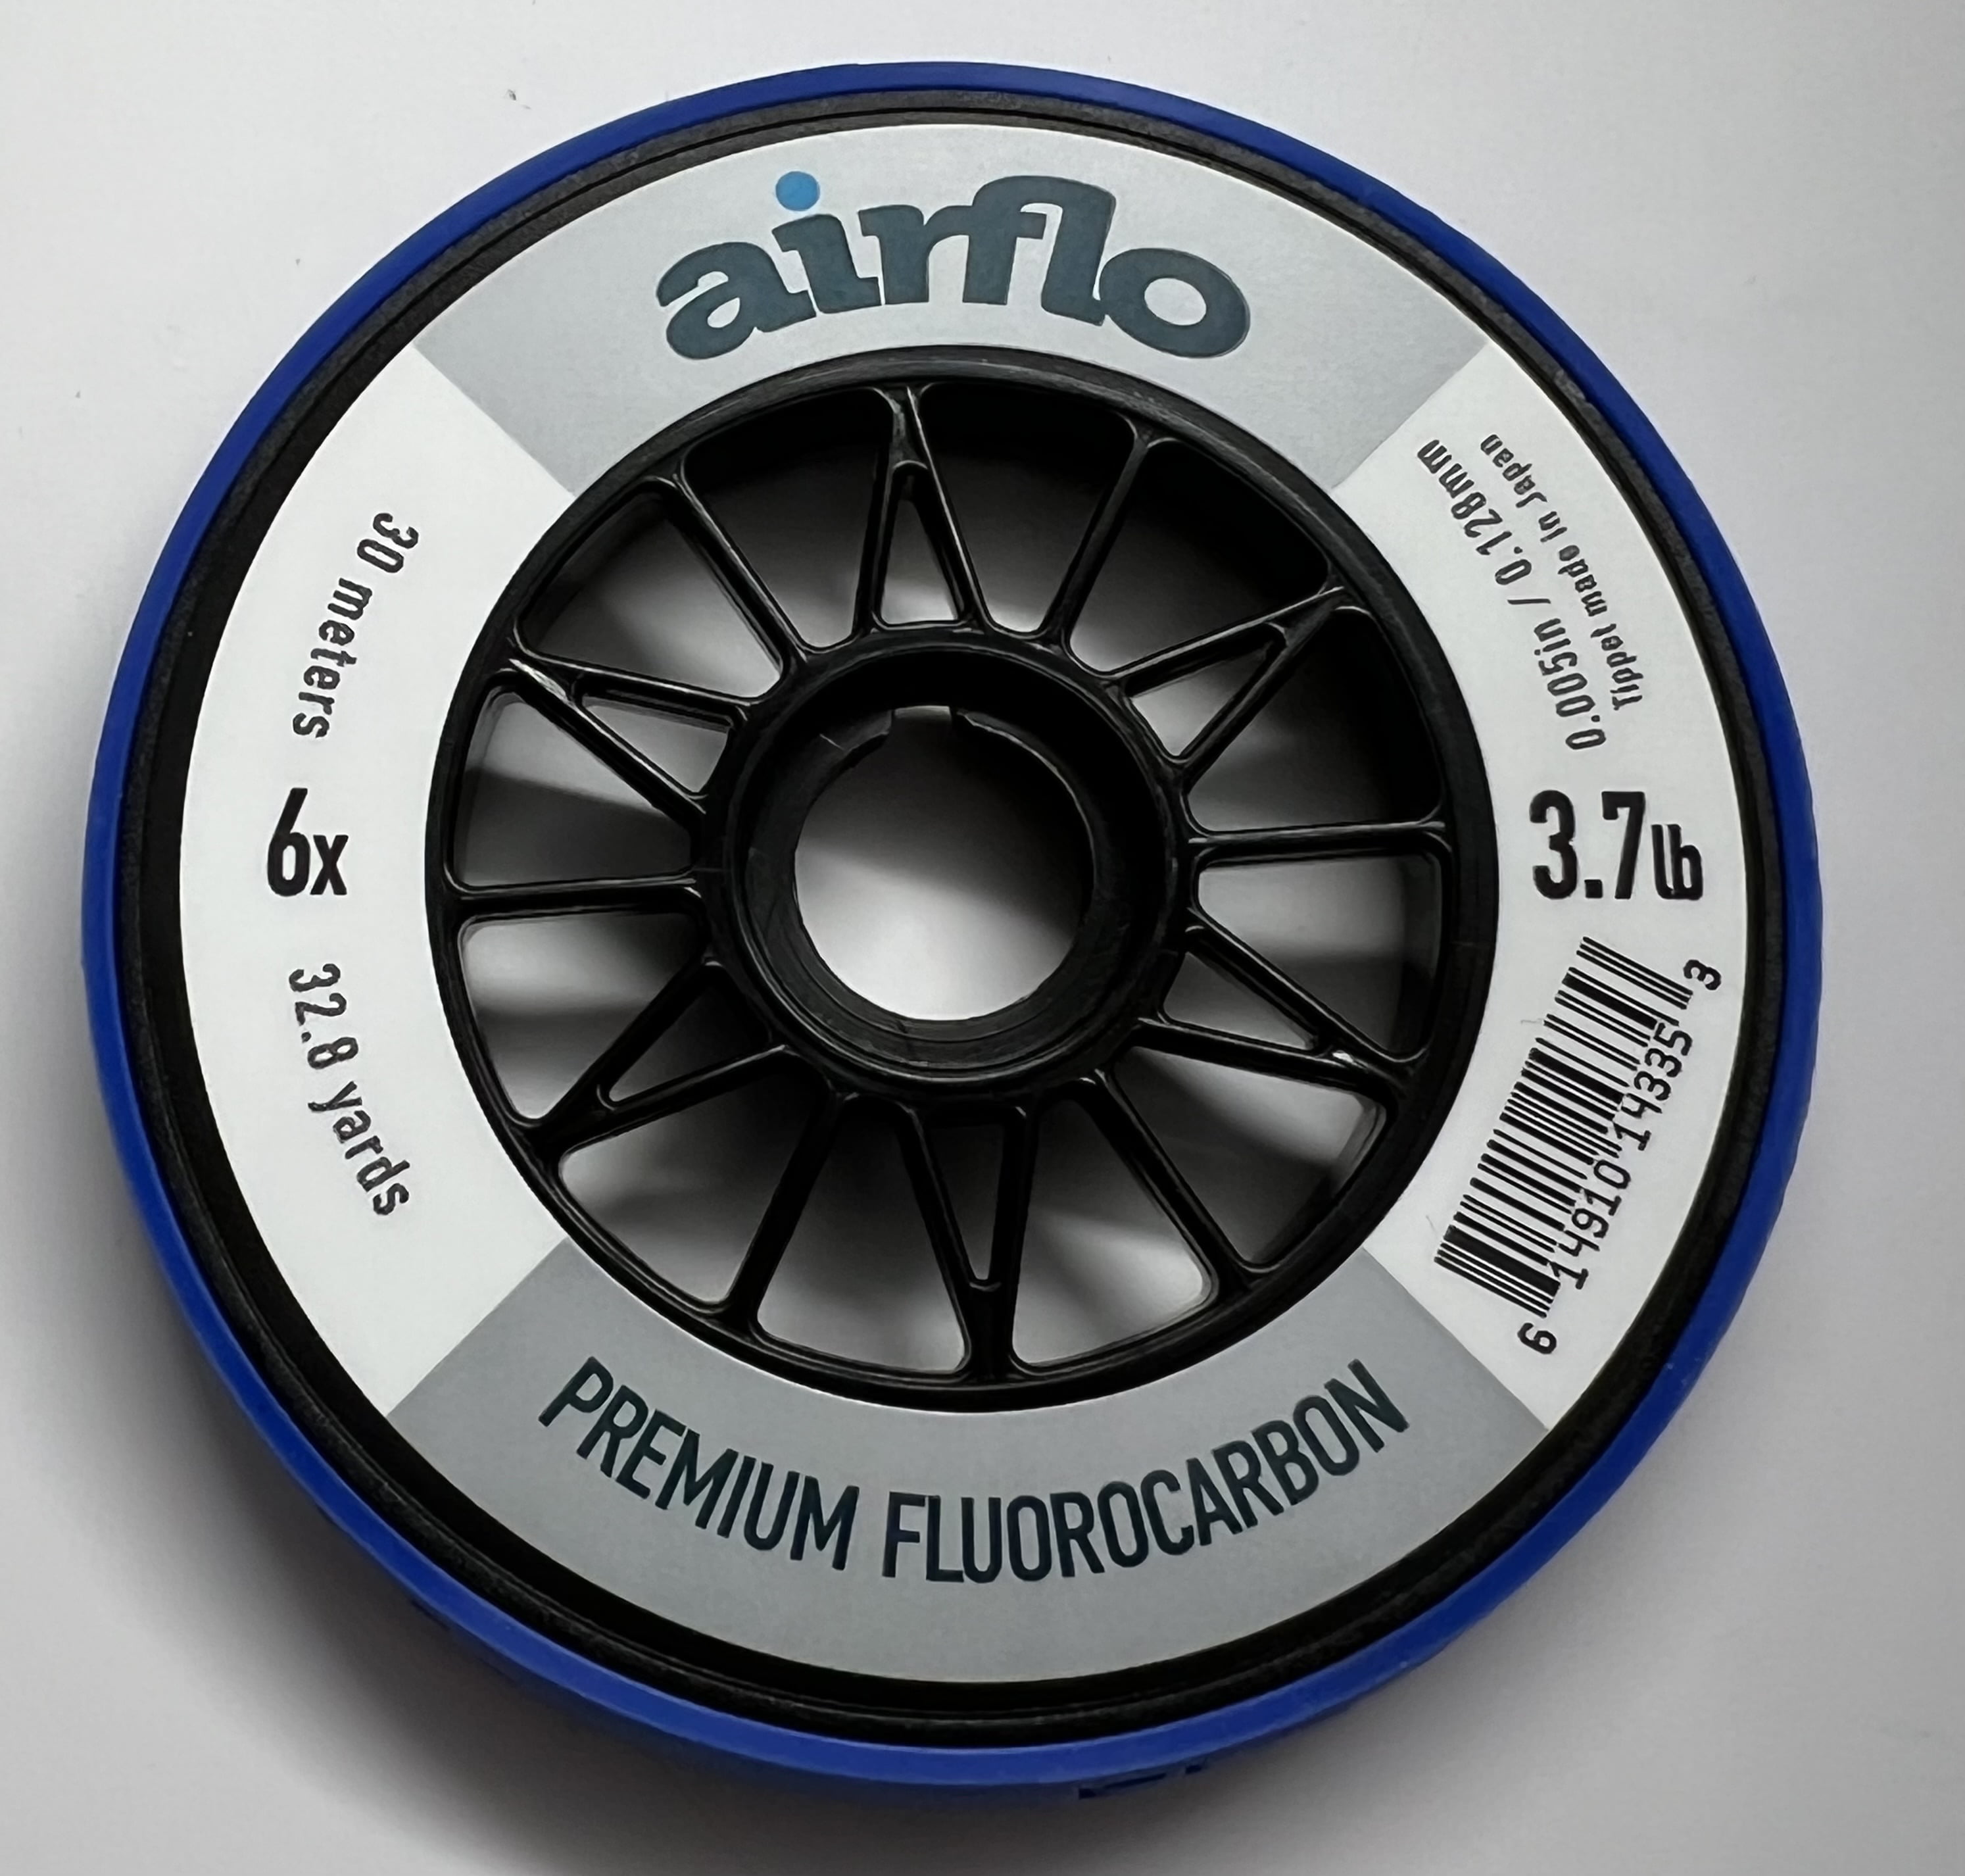 Airflo Premium Fluorocarbon Tippet- 30M - 2X 